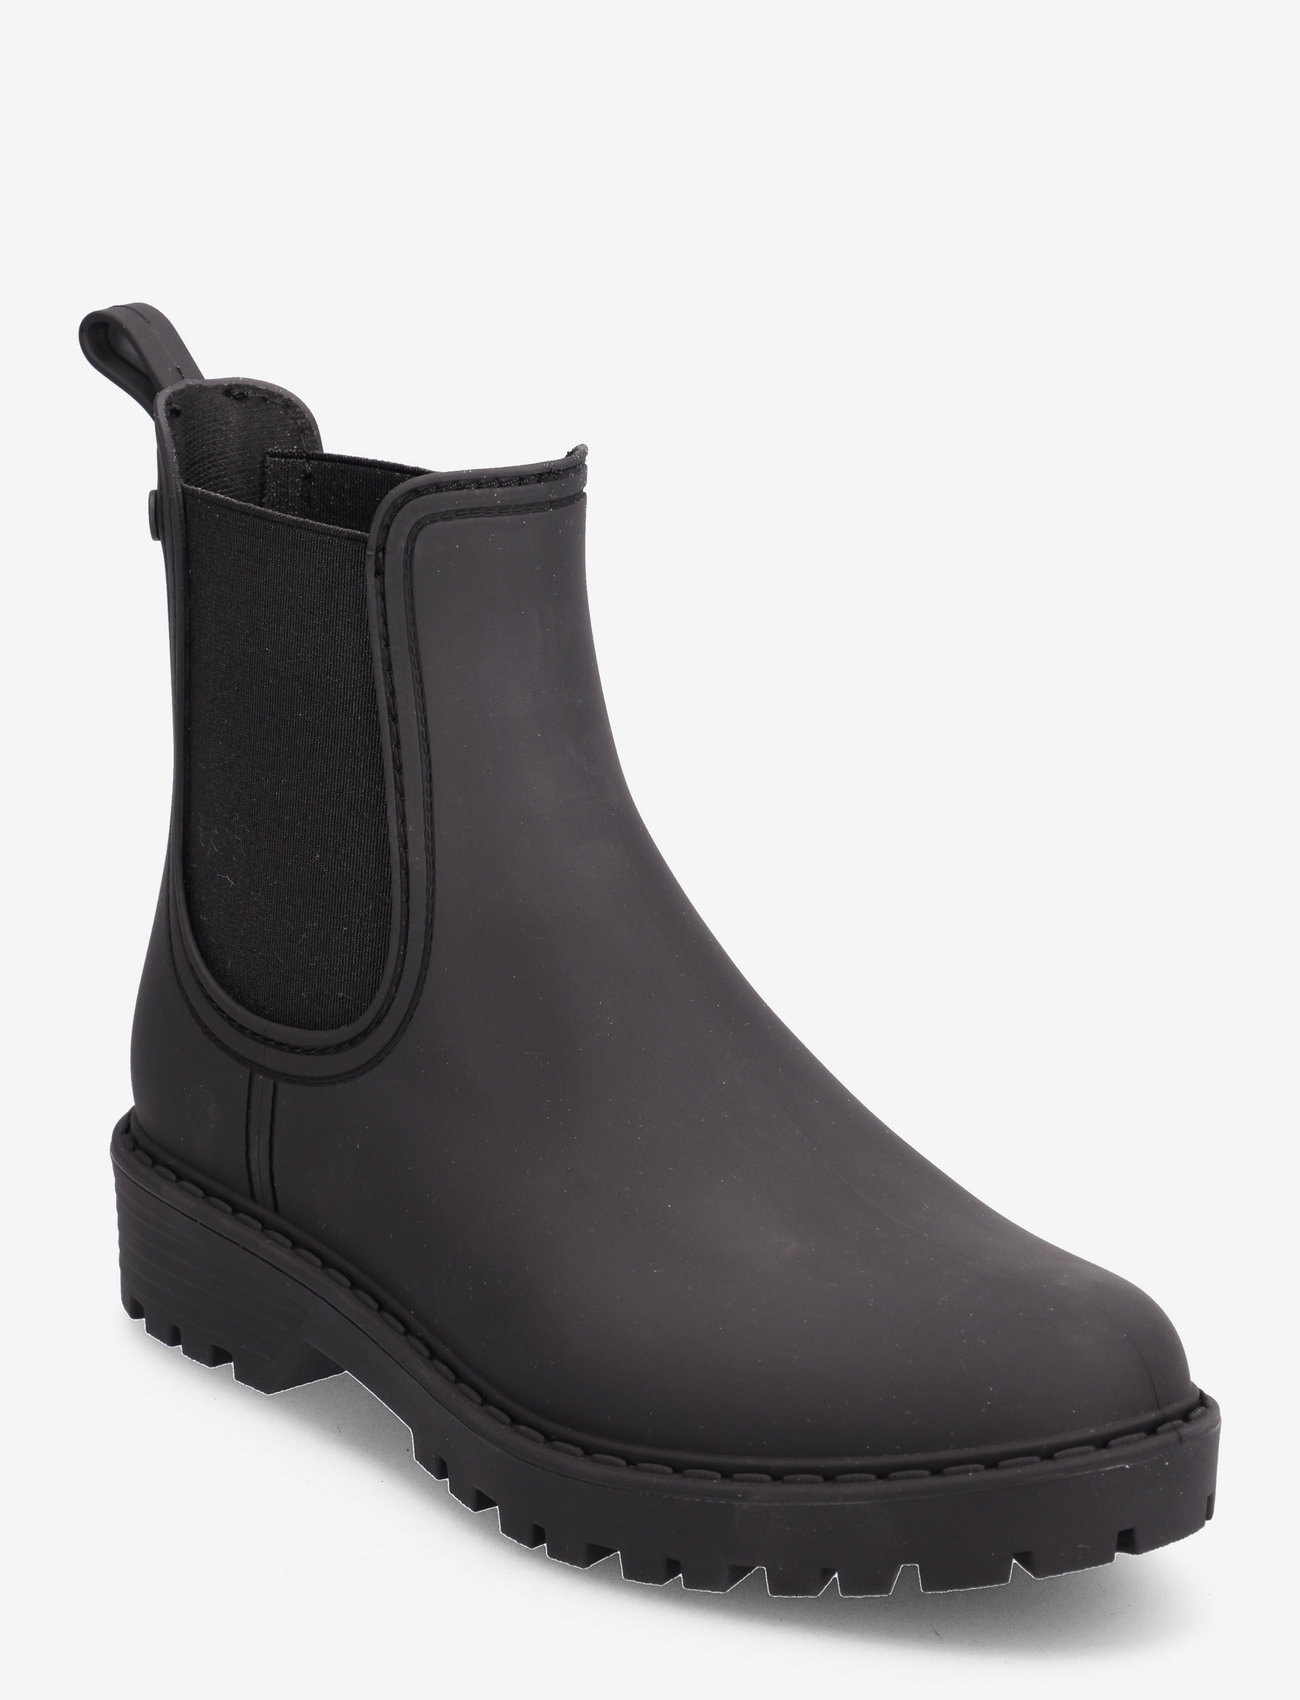 Tamaris - Women Boots - platta ankelboots - black - 0